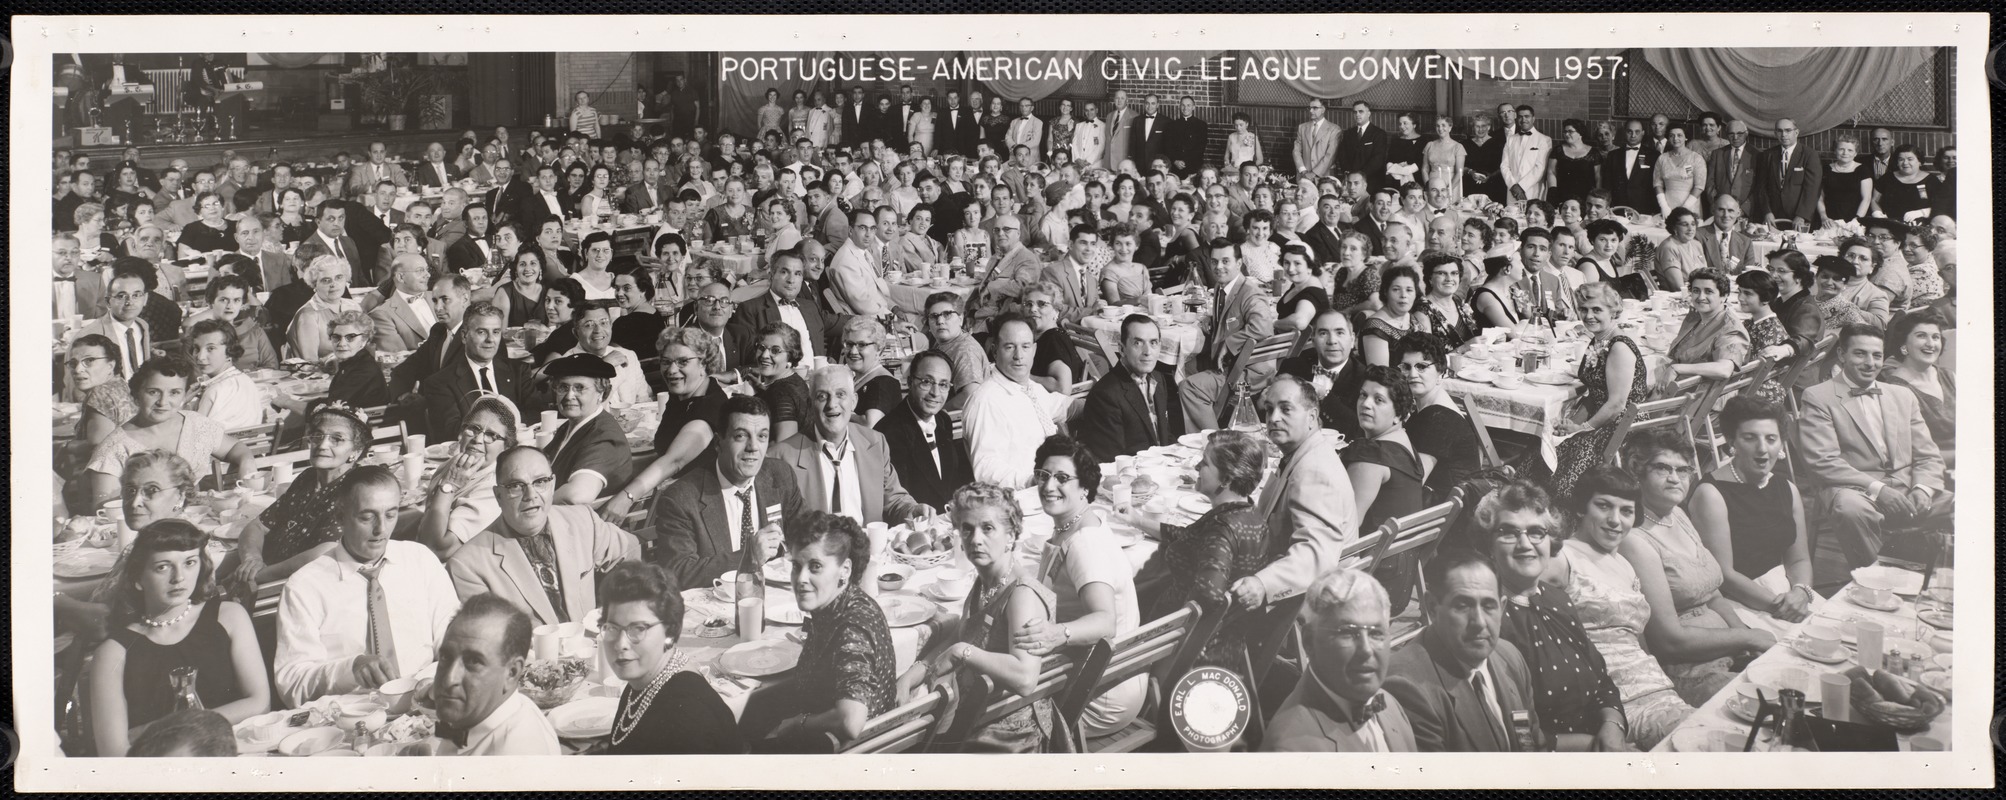 Portuguese-American Civic League convention 1957